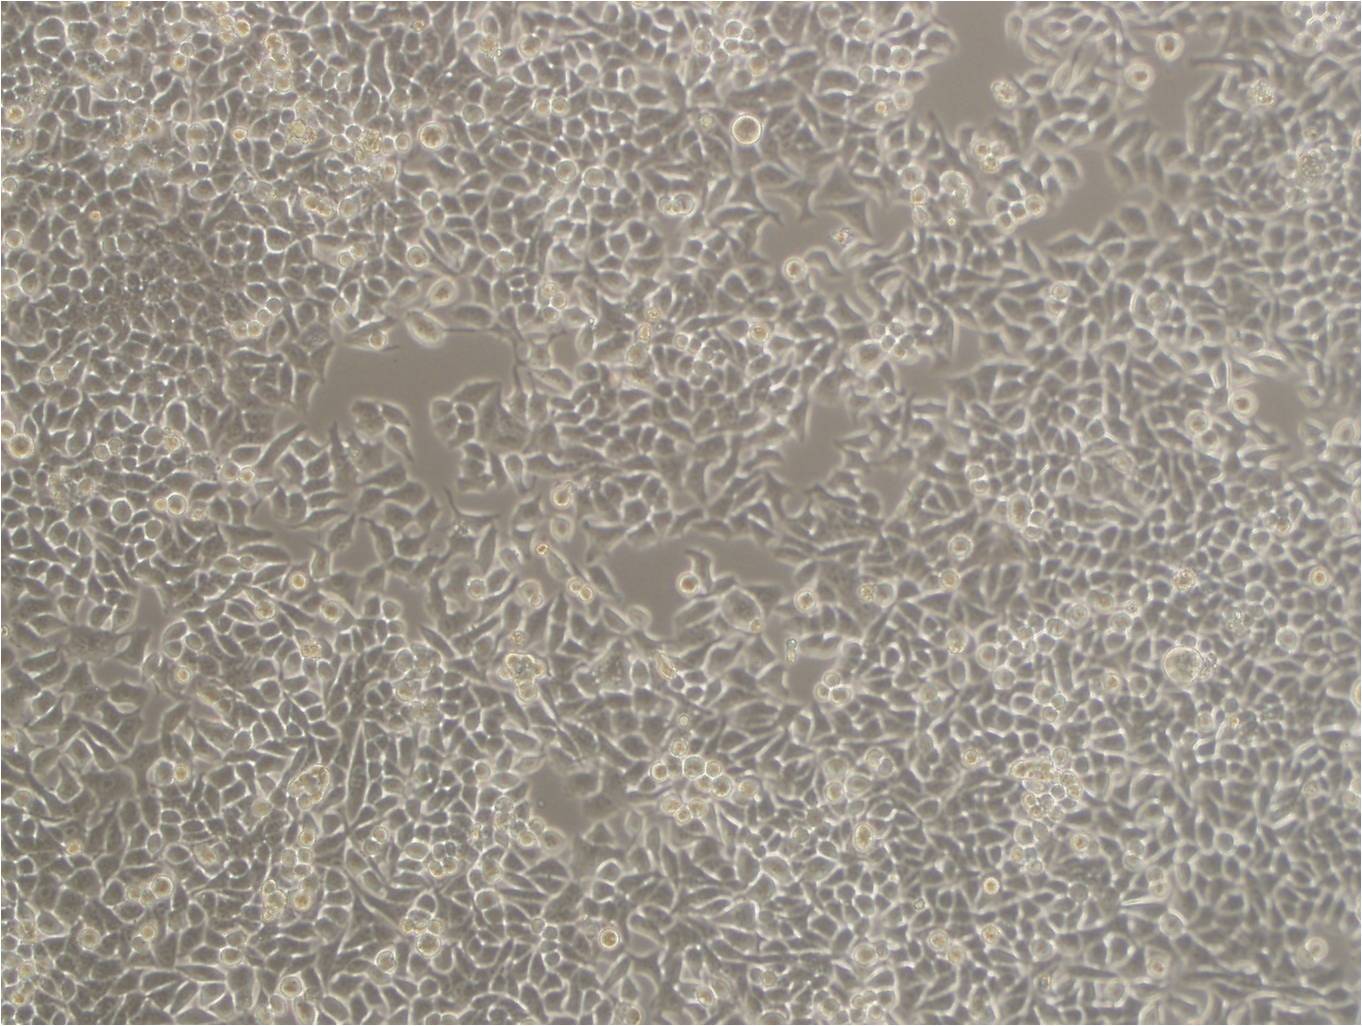 HN-6 Cell:人舌鳞癌细胞系,HN-6 Cell